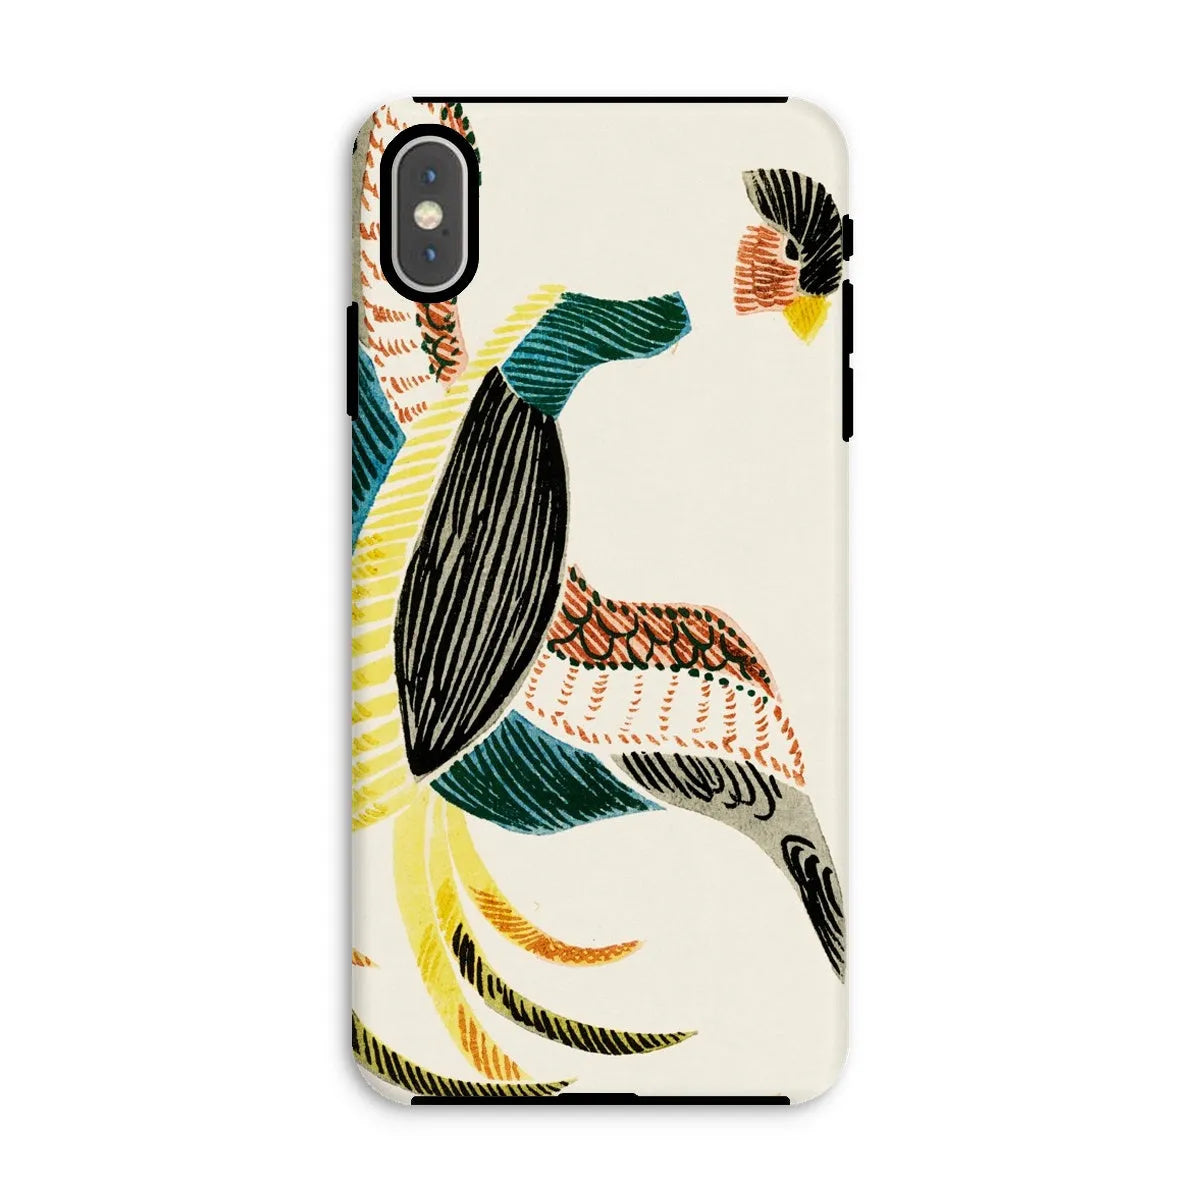 Woodblock Crane - Japanese Bird Phone Case - Taguchi Tomoki - Iphone Xs Max / Matte - Mobile Phone Cases - Aesthetic Art